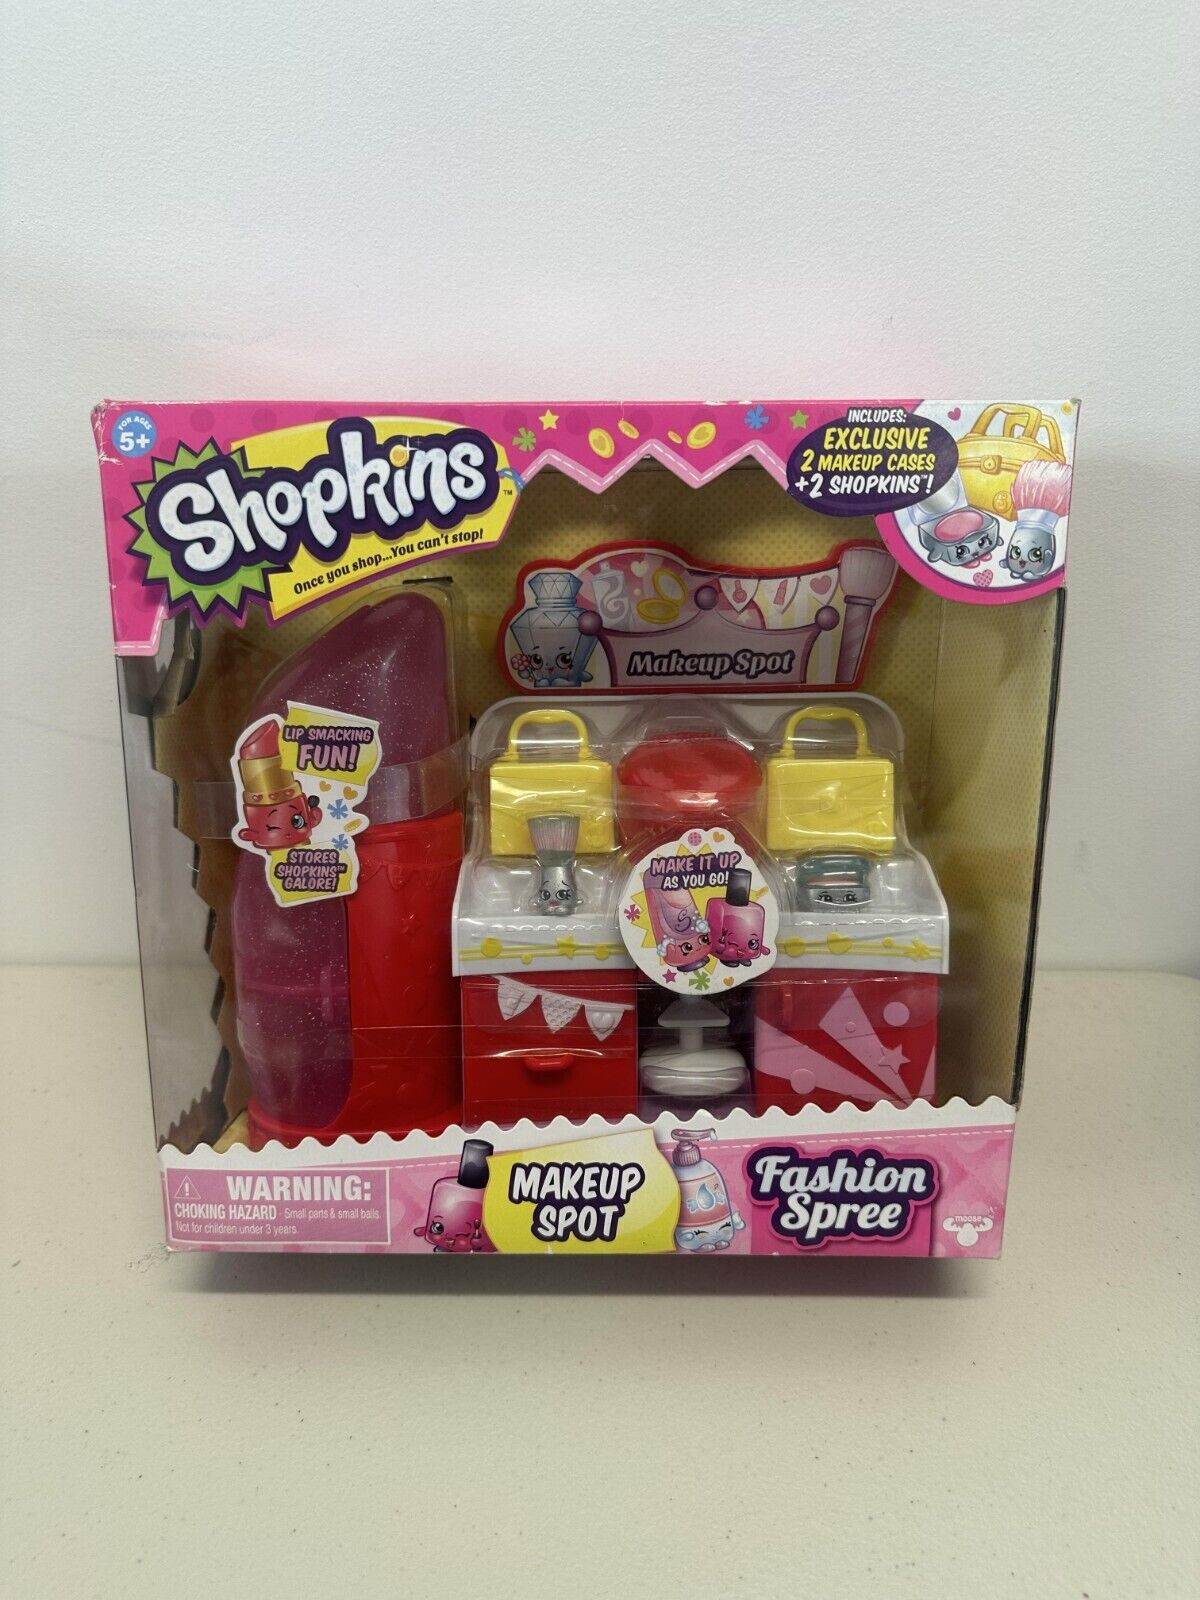 Shopkins Fashion Spree - Make Up Spot Toy Set - NEW IN BOX Slightly Damaged Box